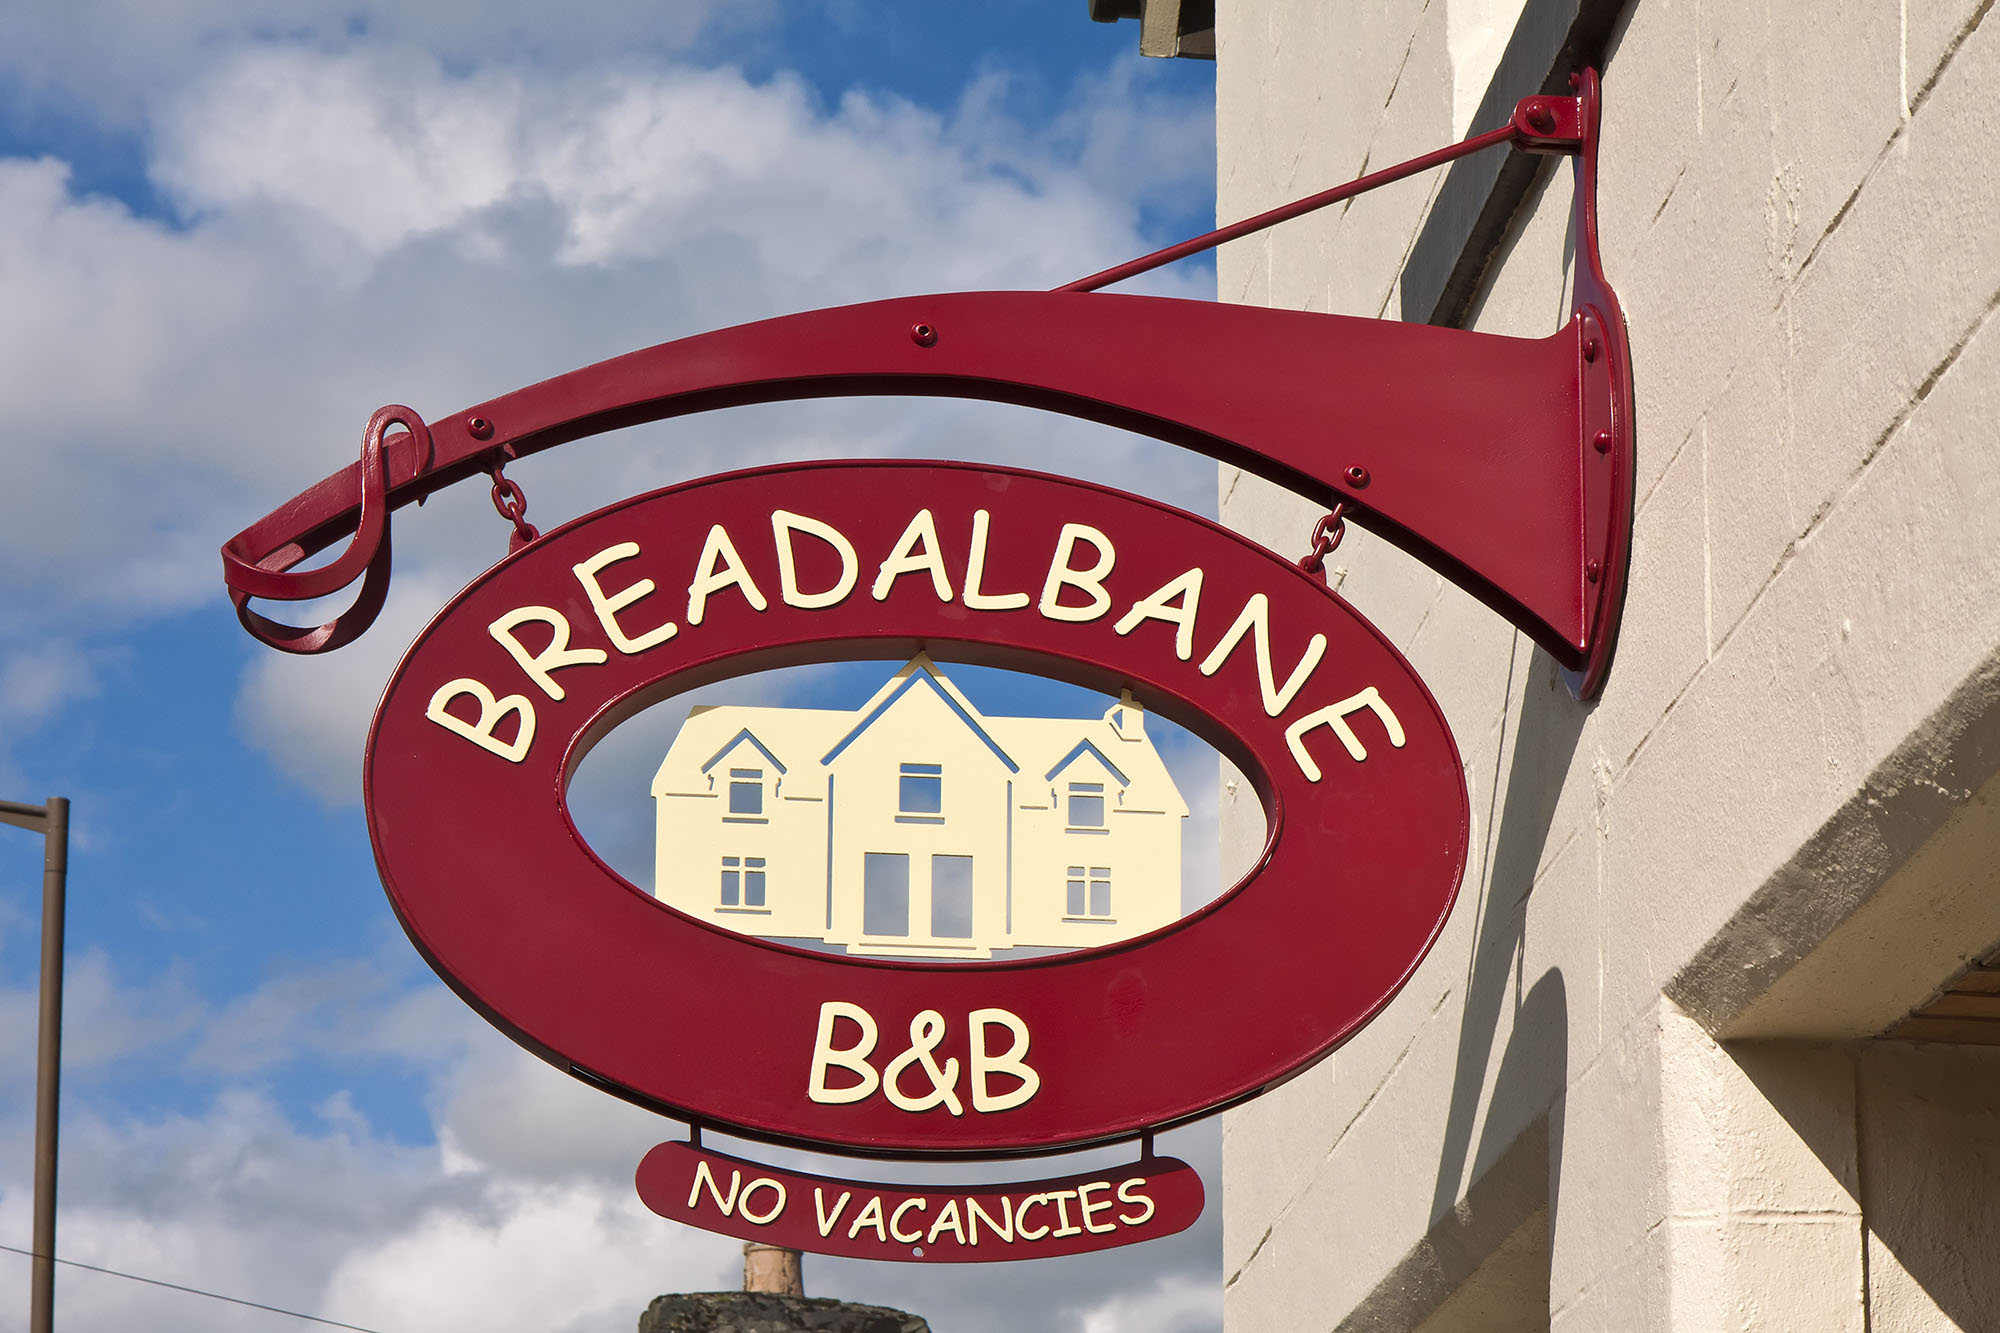 Breadalbane House uithangbord